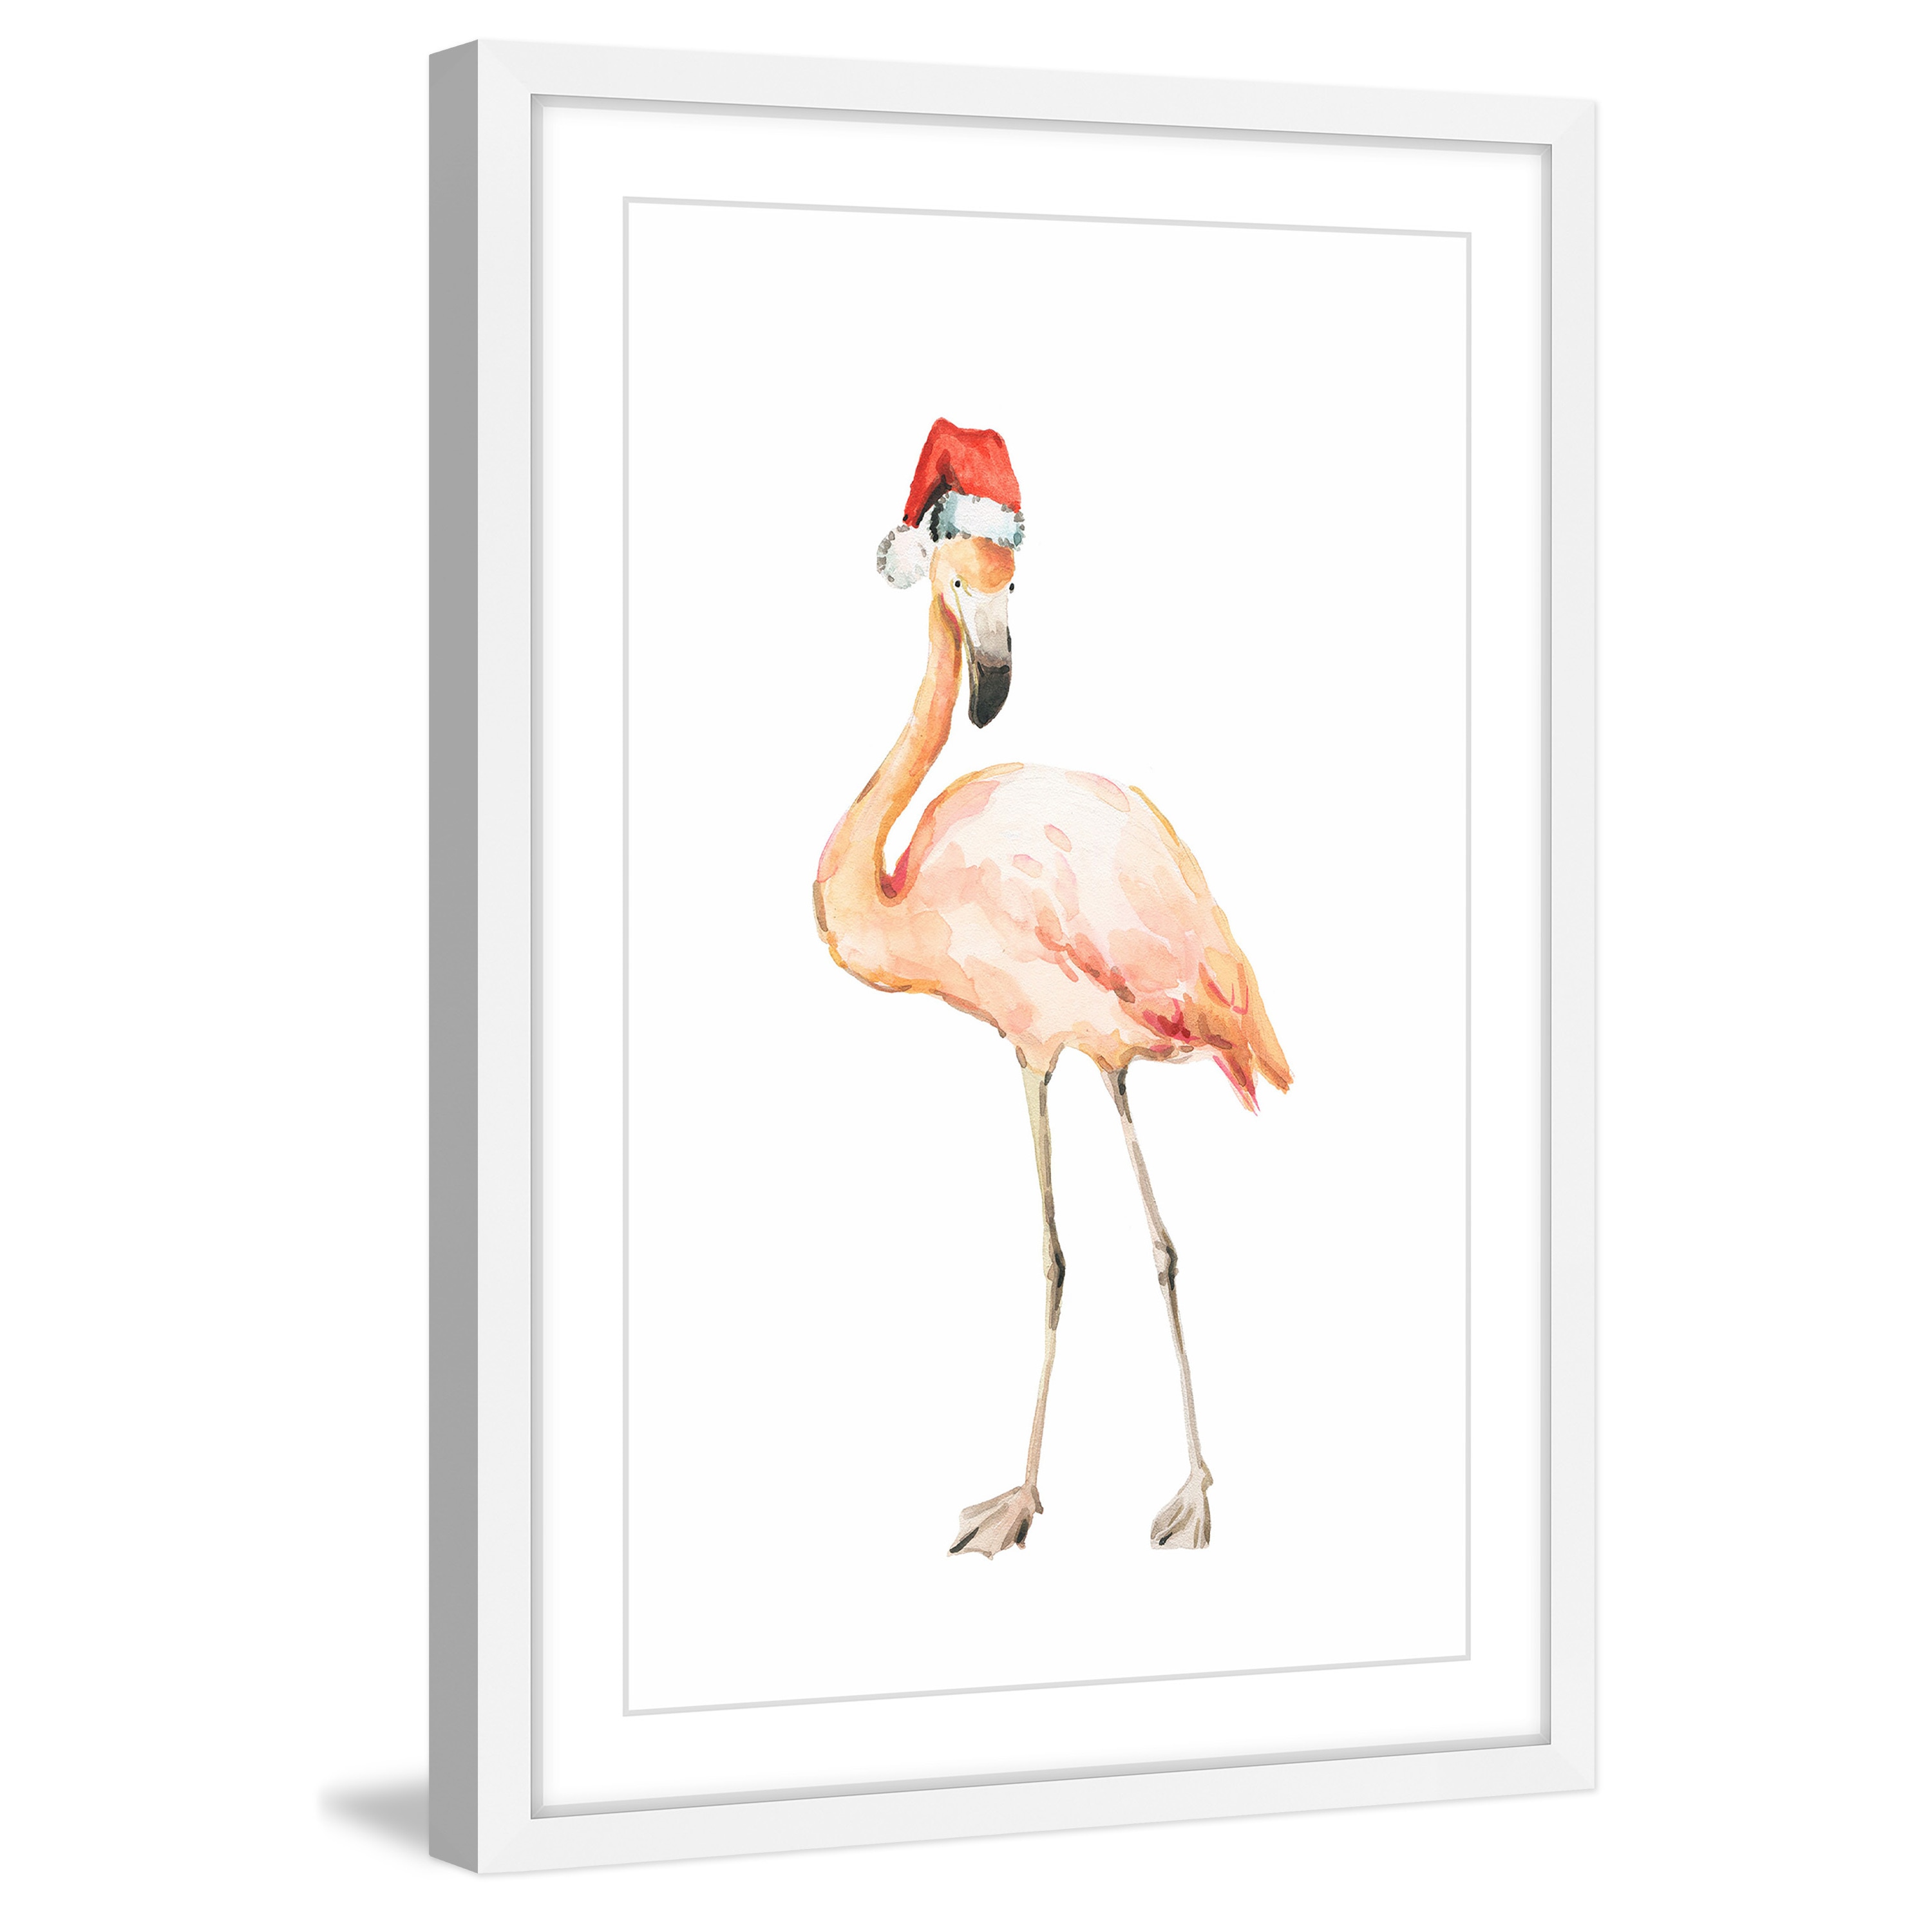 https://ak1.ostkcdn.com/images/products/17137339/Christmas-Flamingo-II-Framed-Painting-Print-d2149f07-aced-483d-82e8-f9b39a9a5b10.jpg